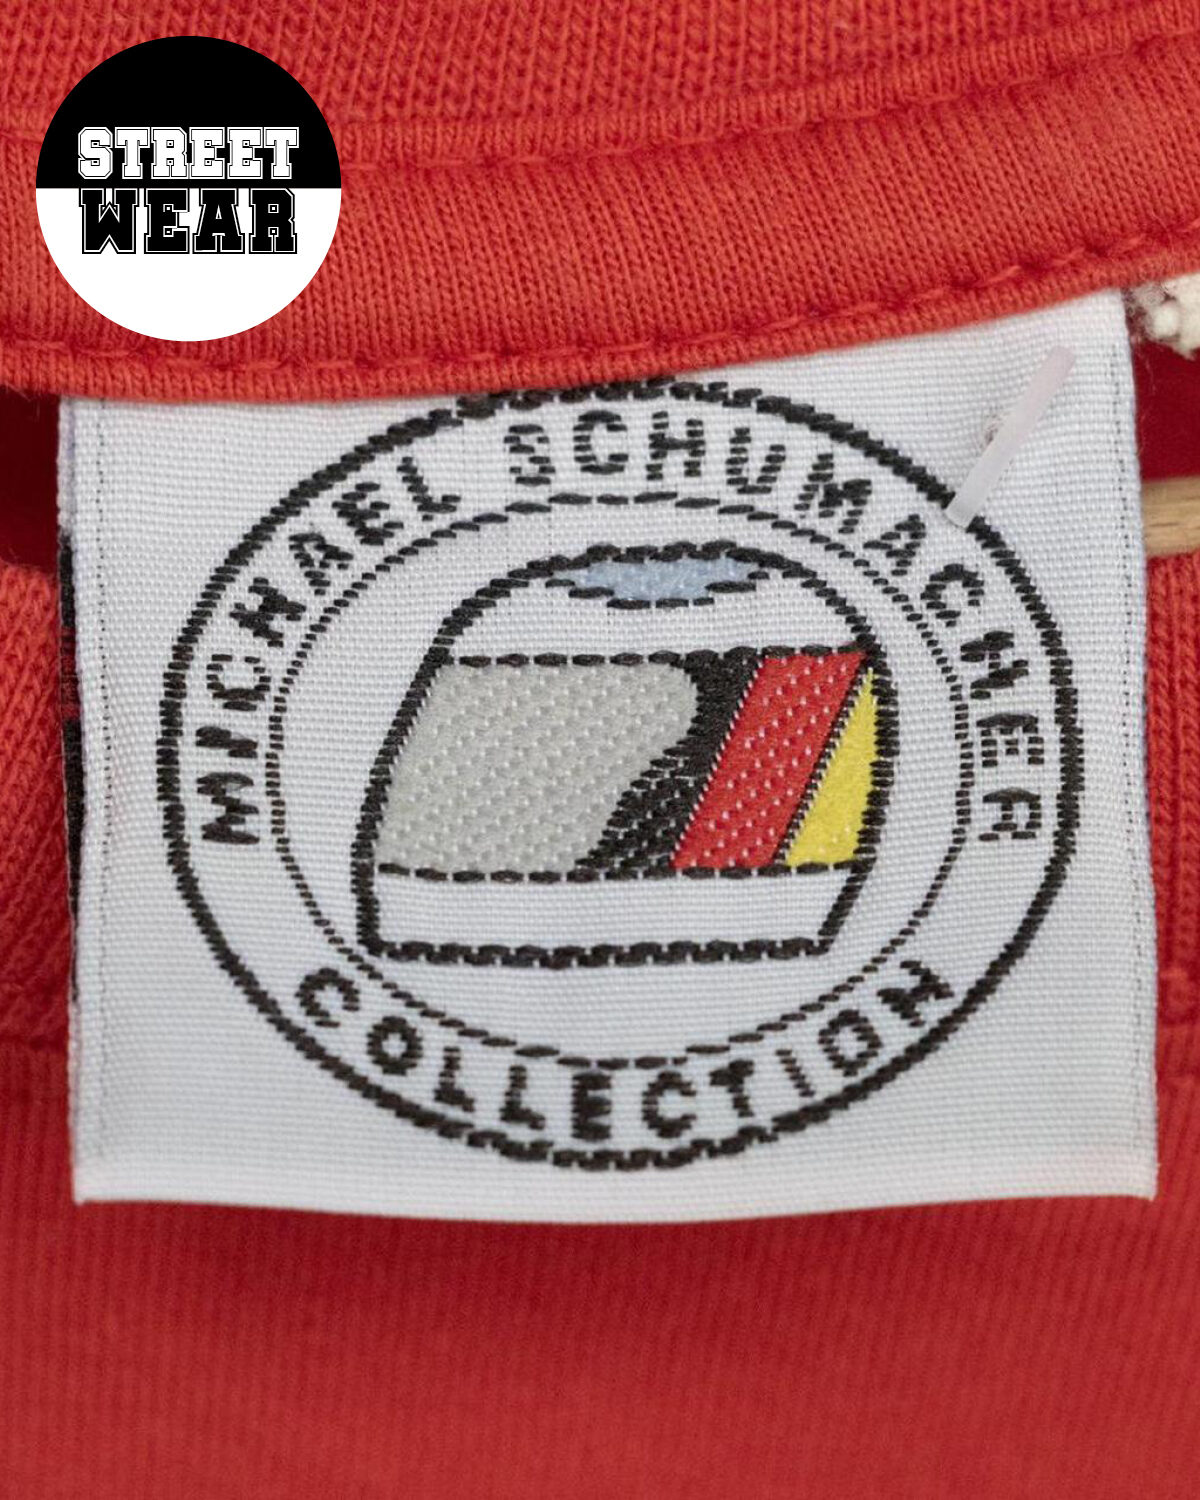 Michael Shumacher - T-shirt ufficiale